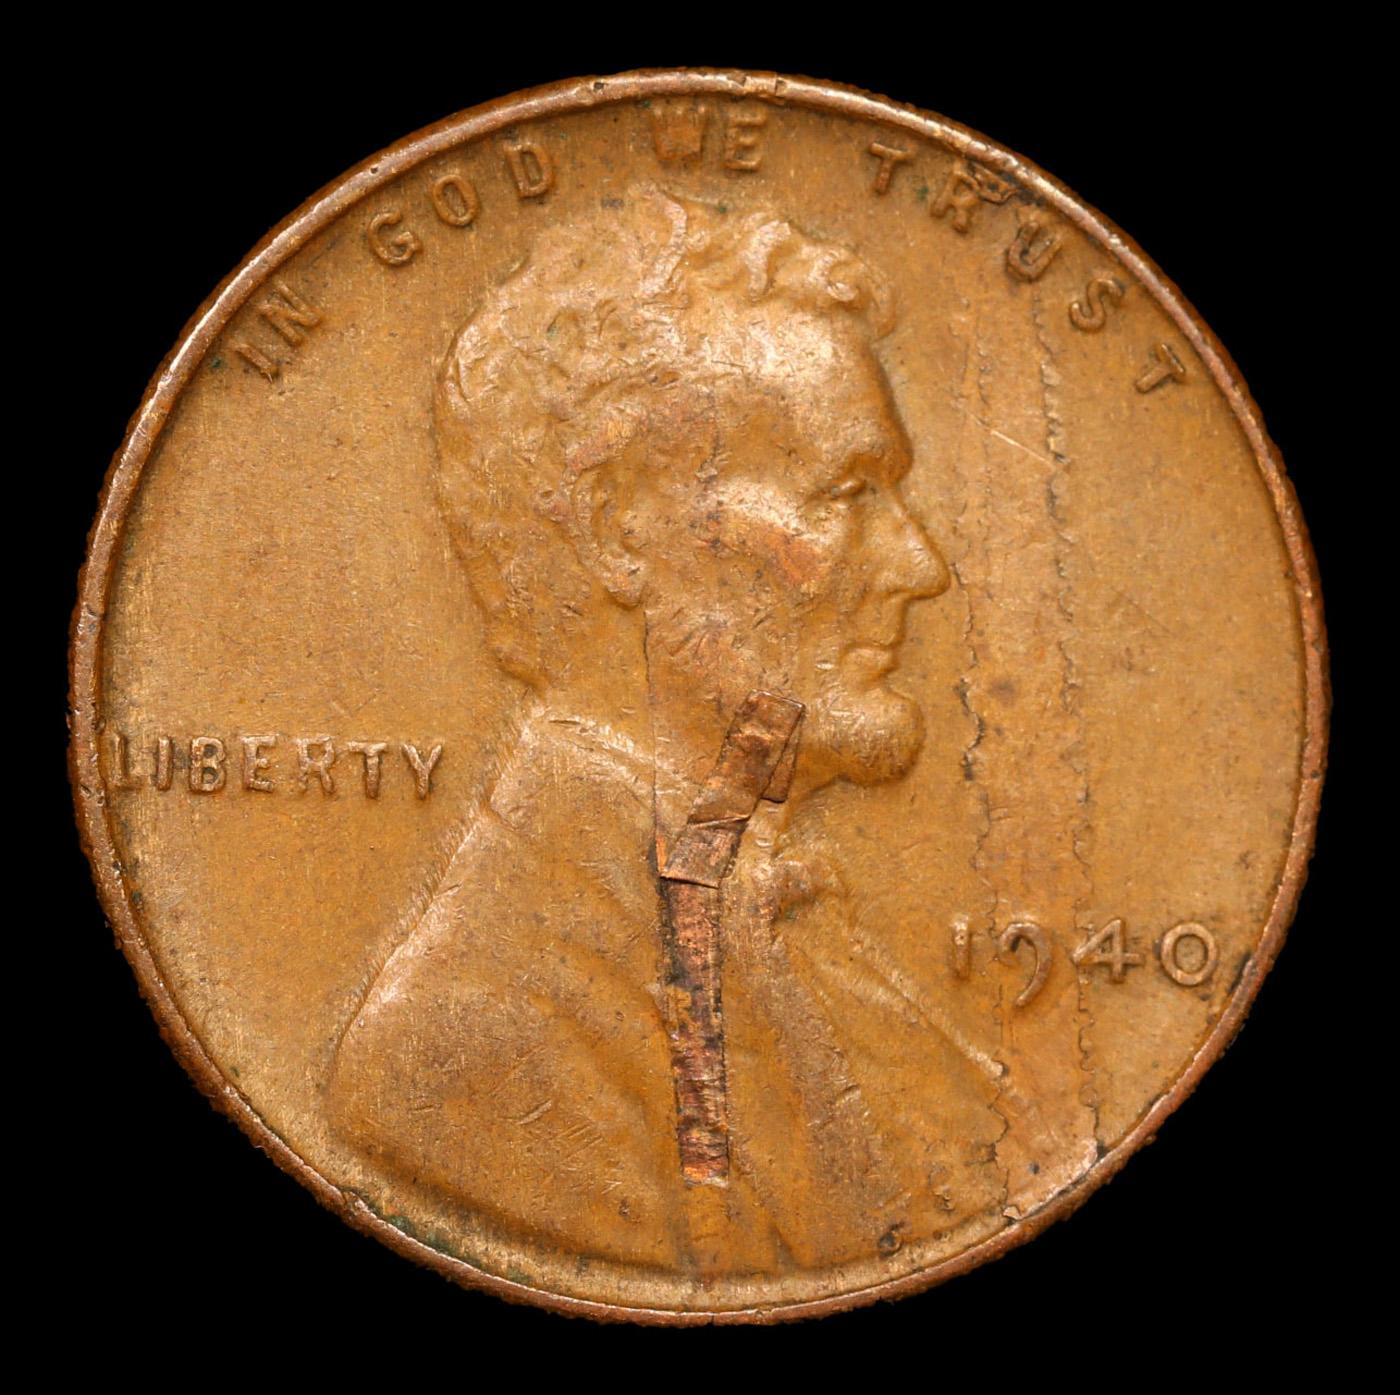 1940-p Lincoln Cent Mint Error 1c Grades Select Unc BN